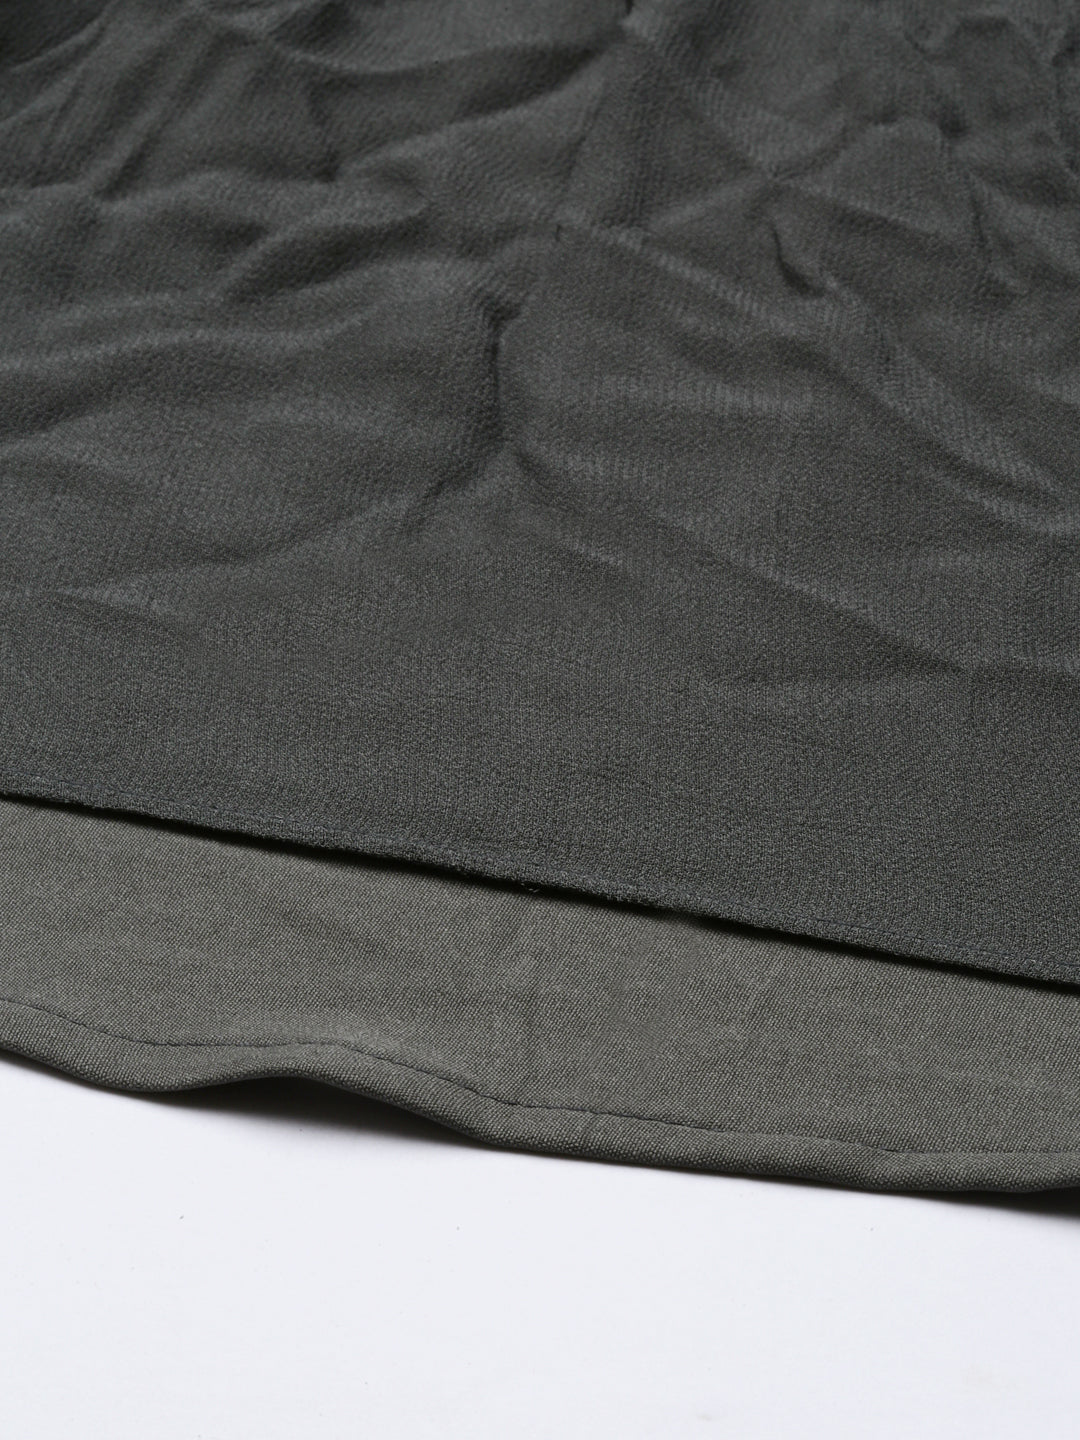 Neeru'S Grey Color, Georgette Fabric Tunic